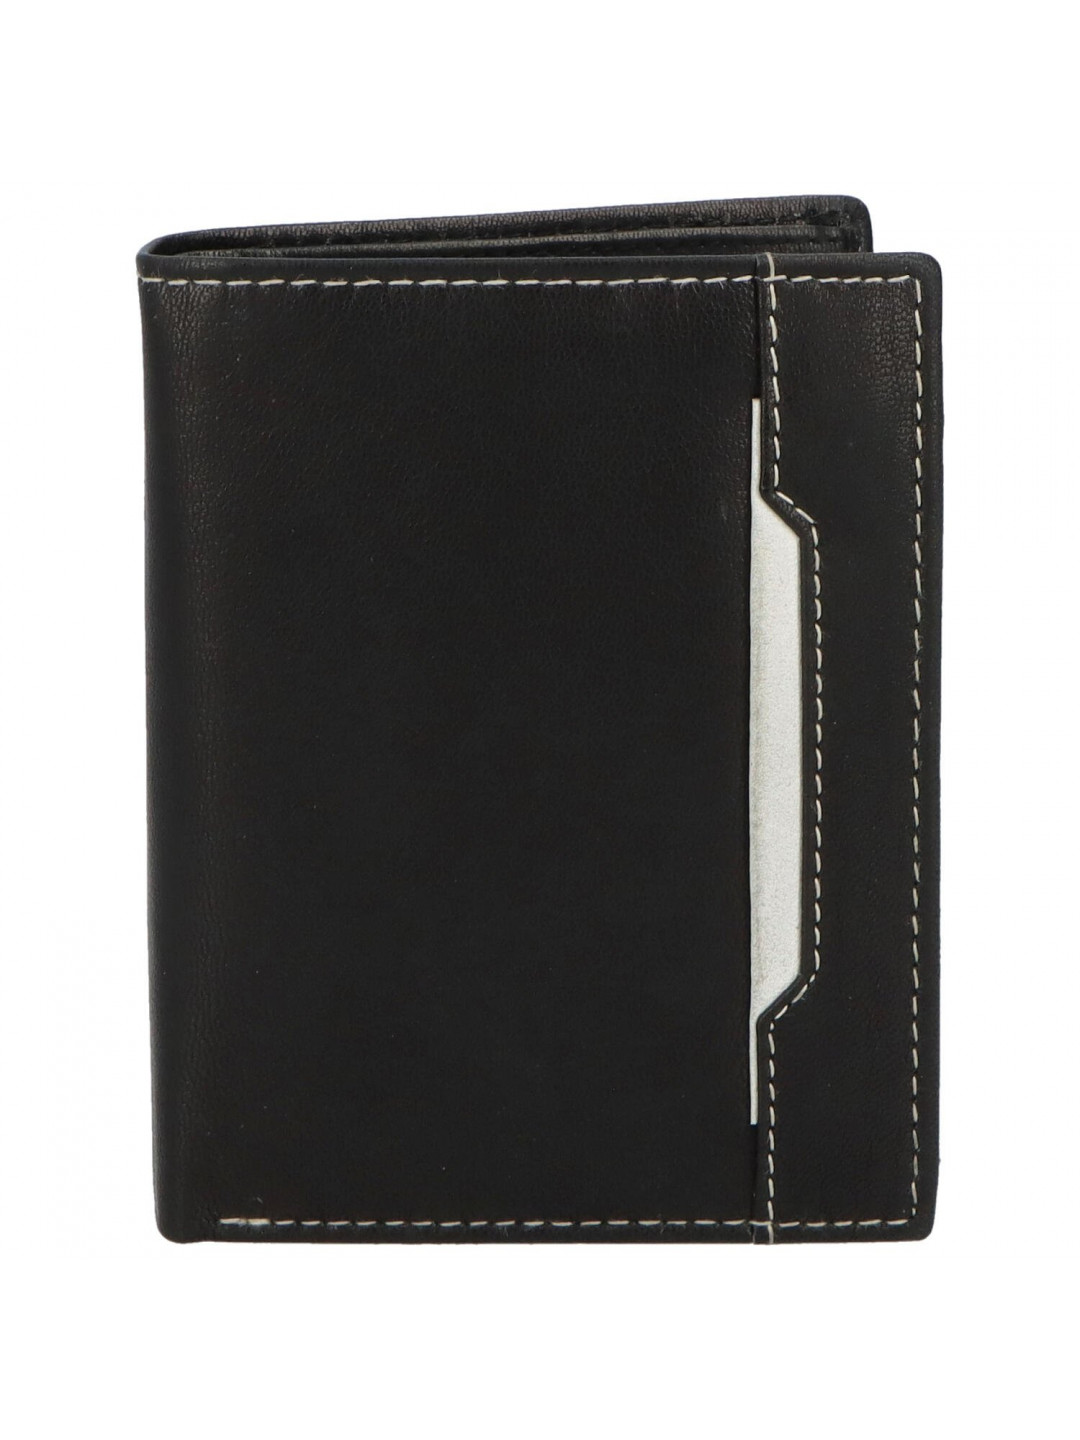 Trendová pánská kožená peněženka Mluko černá – bílá